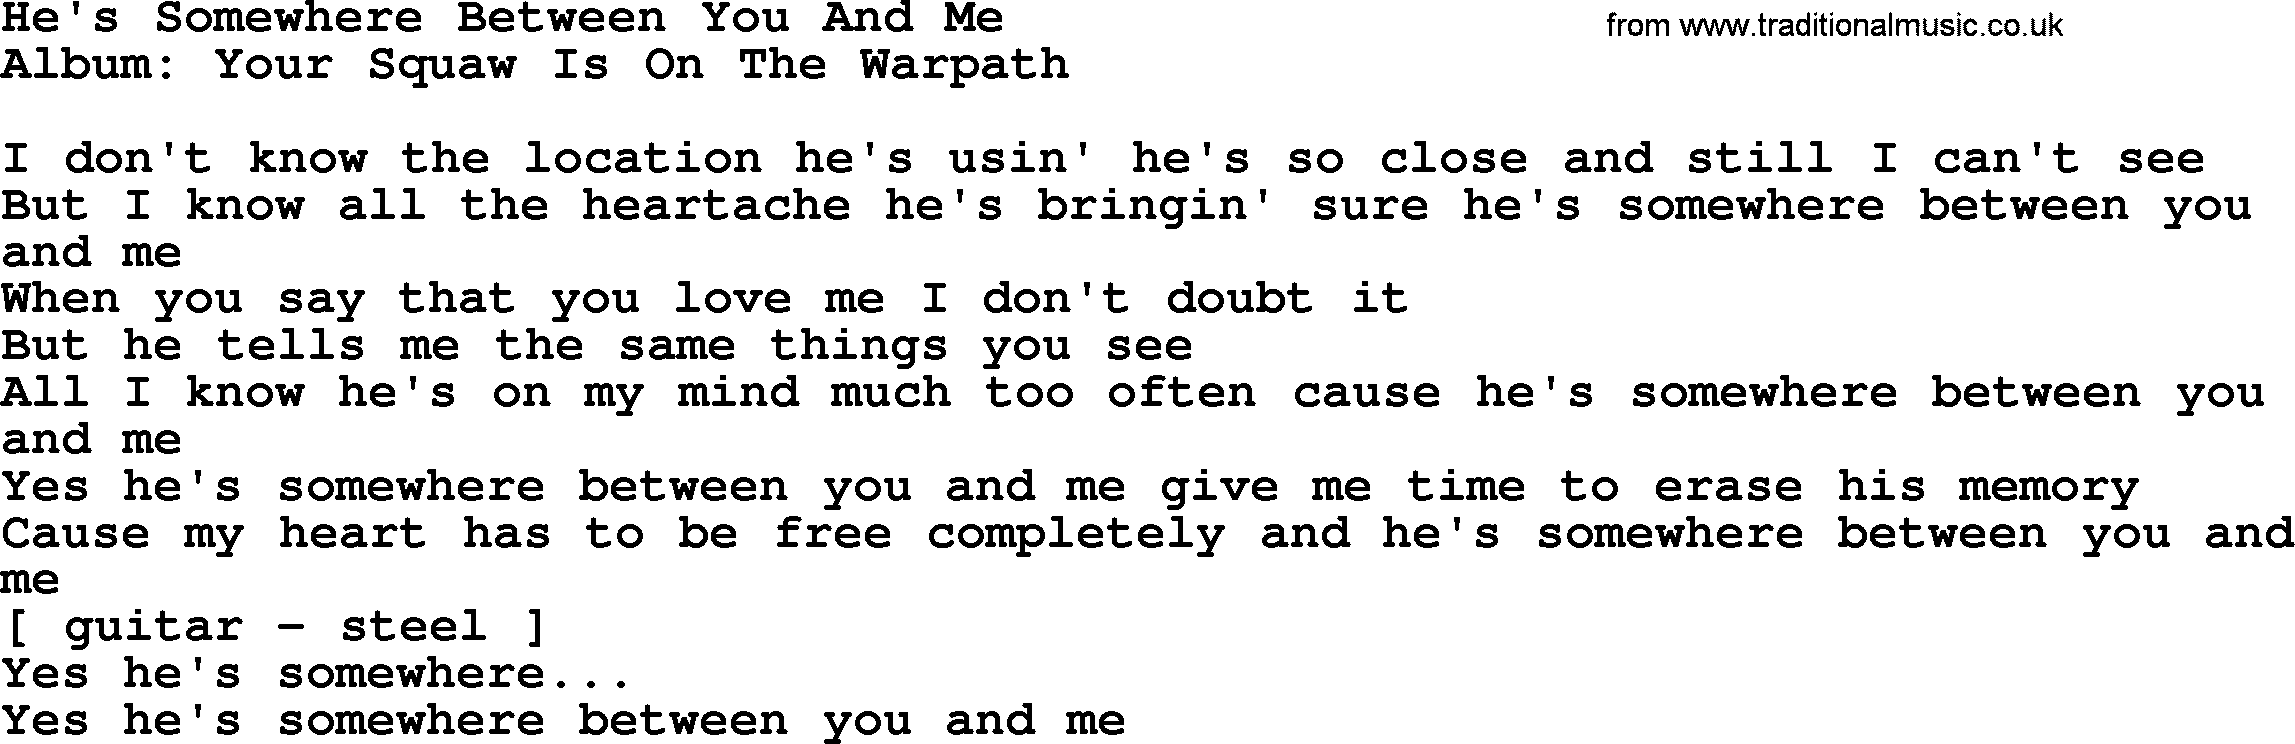 Loretta Lynn song: He's Somewhere Between You And Me lyrics